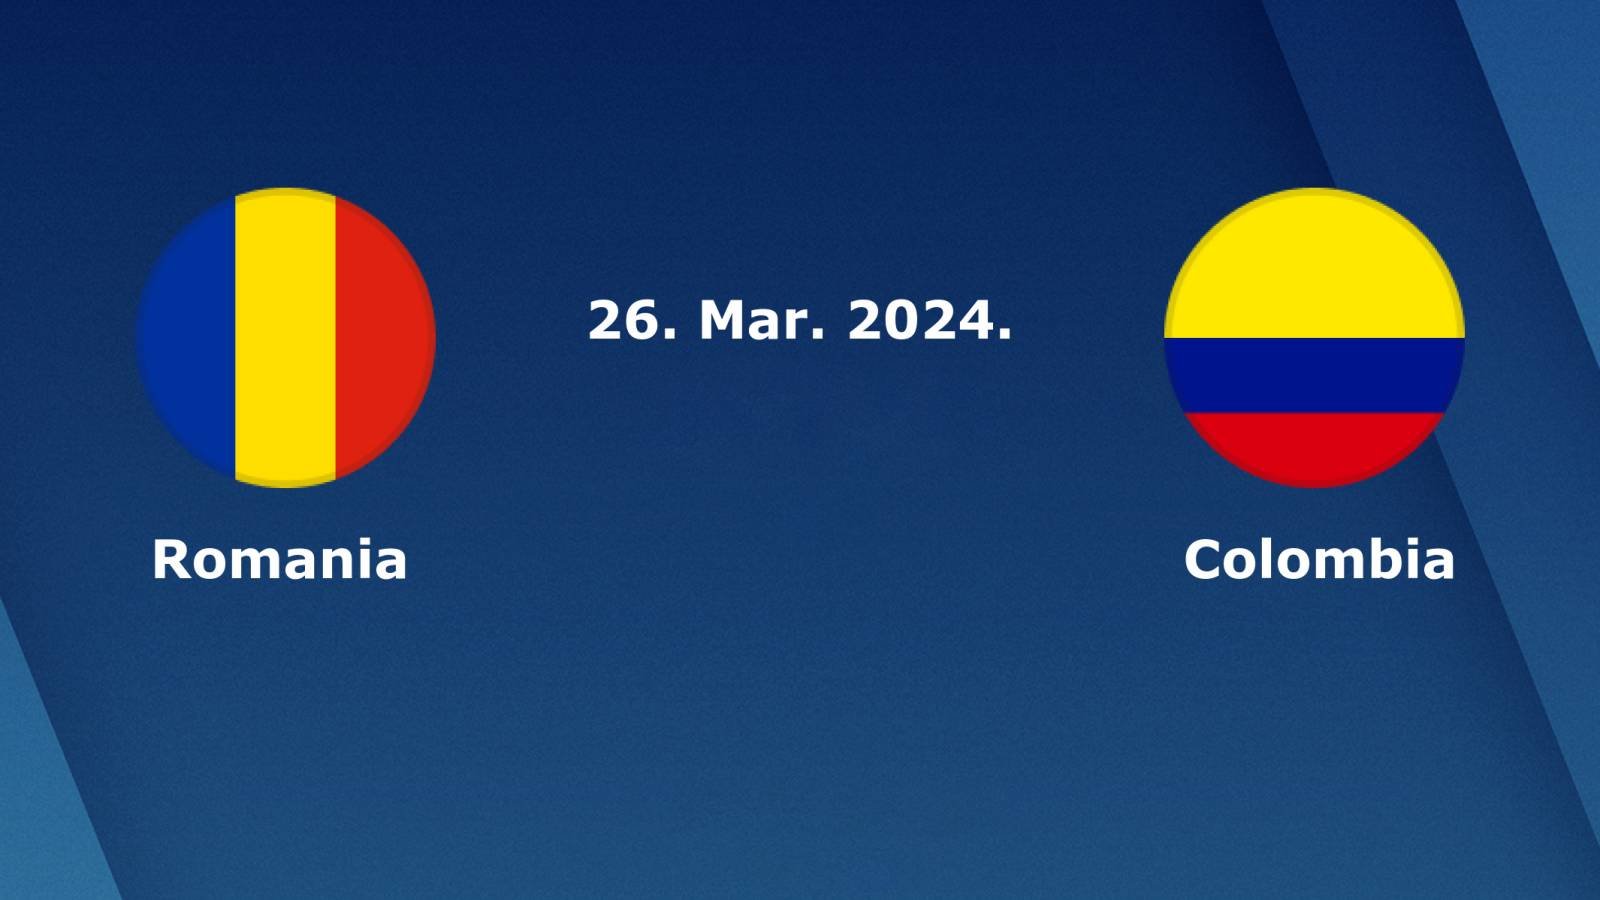 COLOMBIA - ROMANIA LIVE ANTENA 1, FOOTBALL MATCH BEFORE EURO 2024